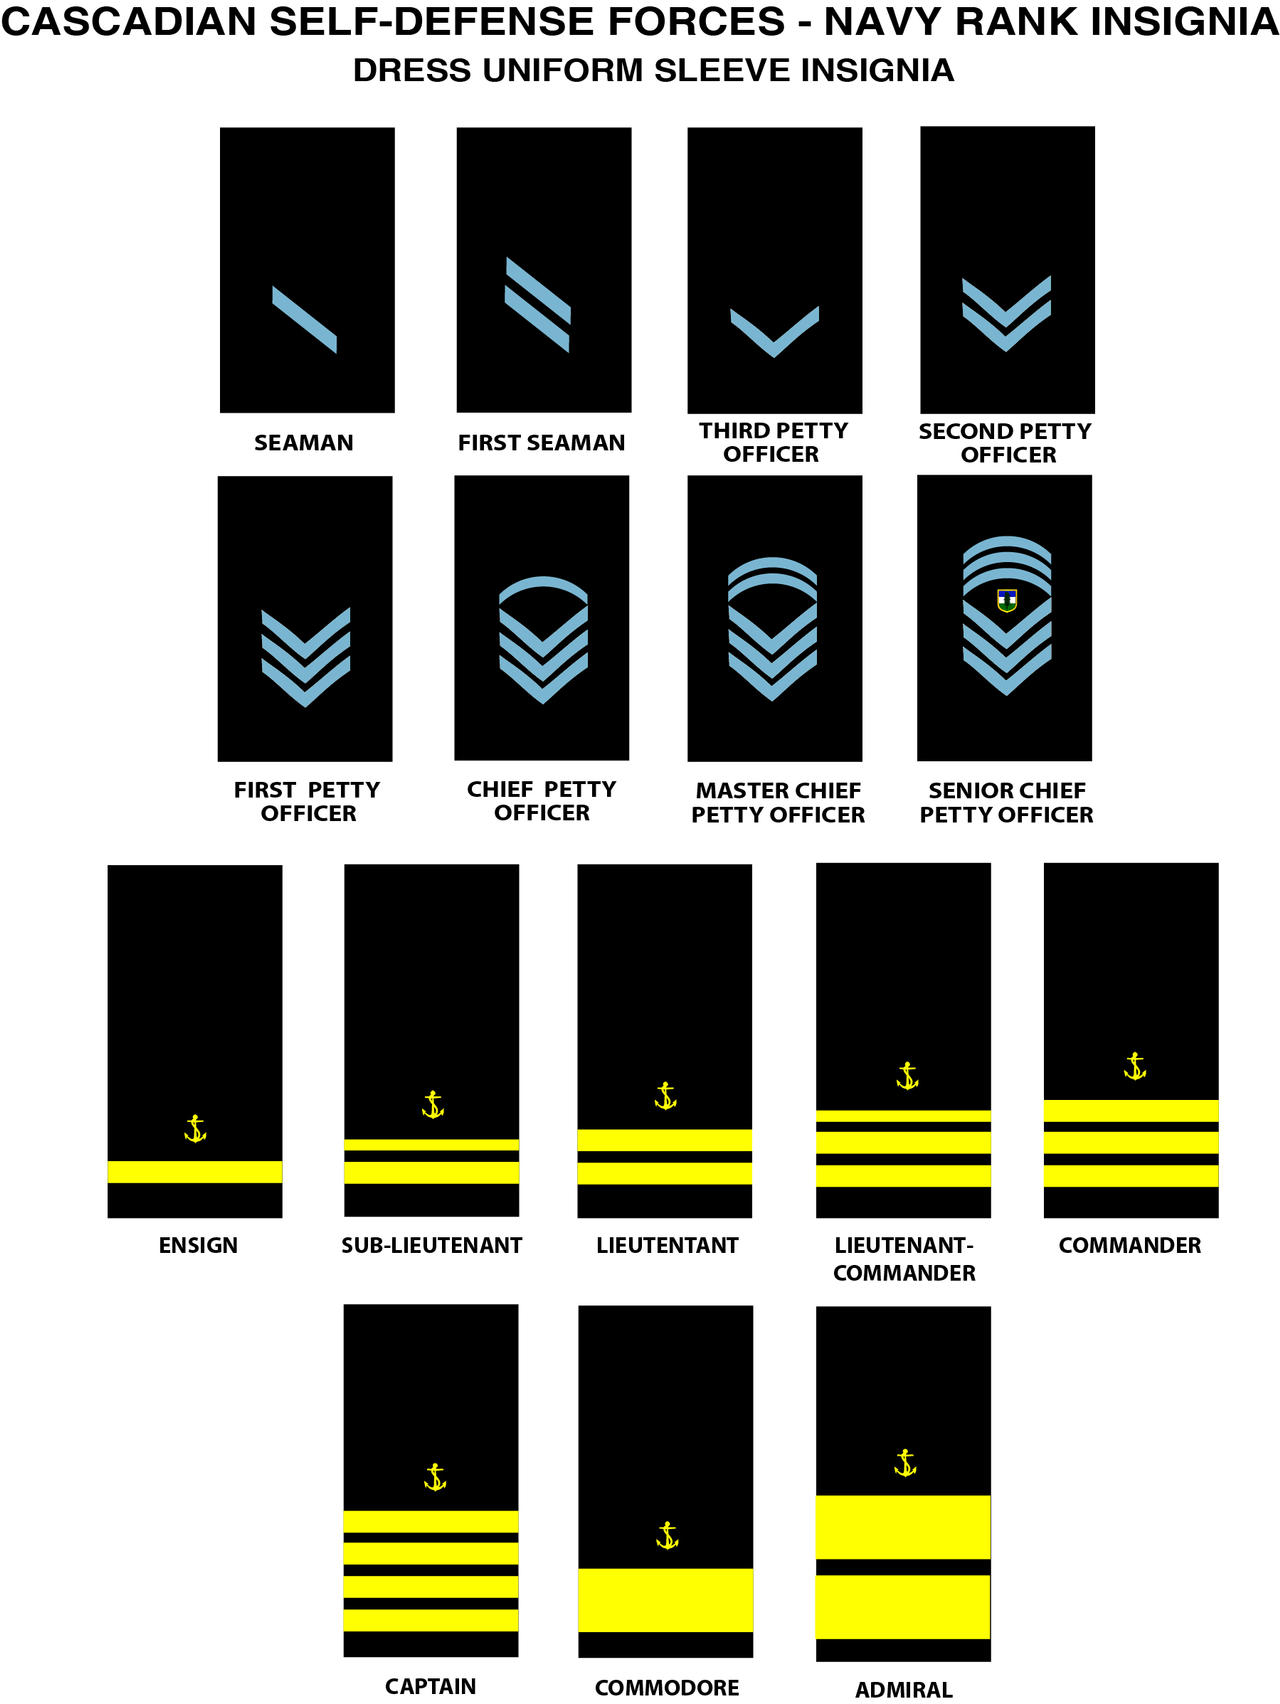 Csdf Navy Rank Insignia 2014 By Shakineyeworks On Deviantart | Free ...